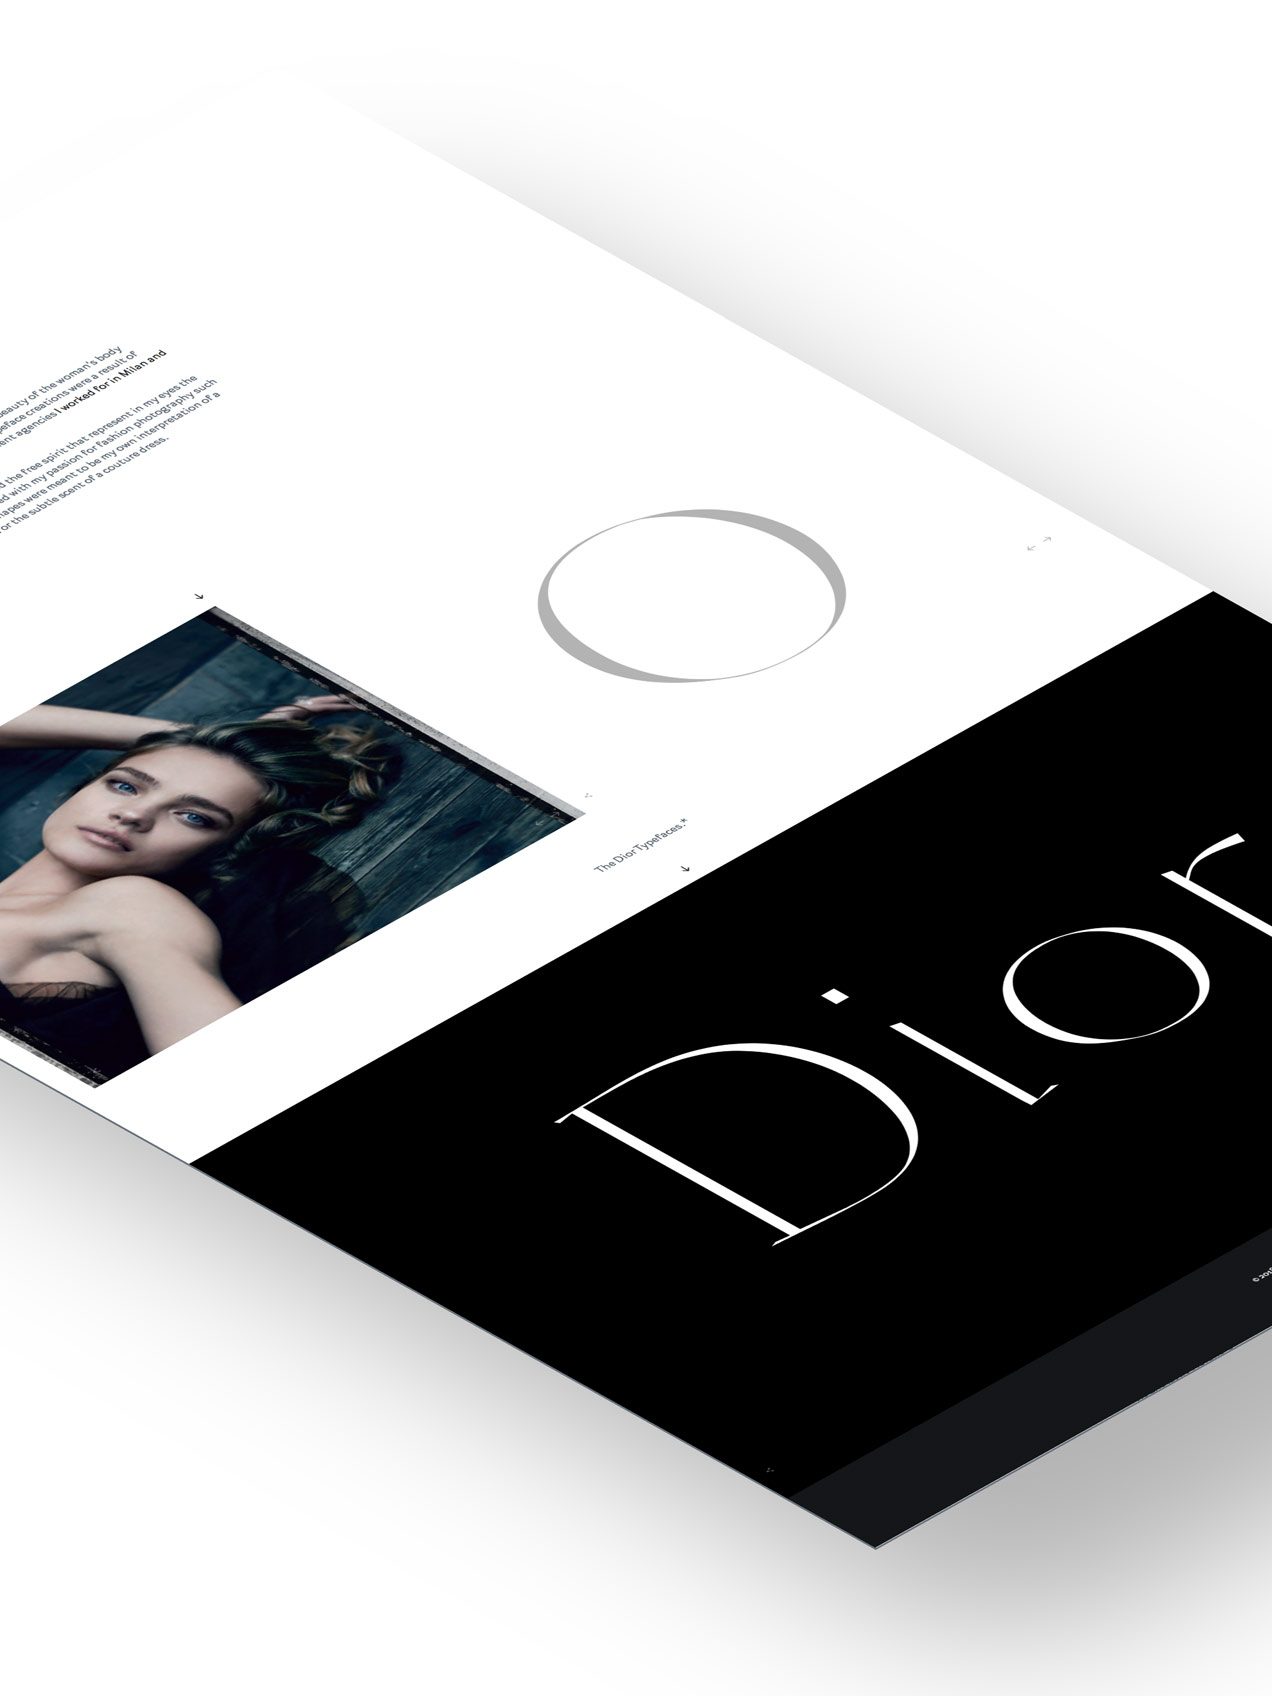 The Dior Typefaces